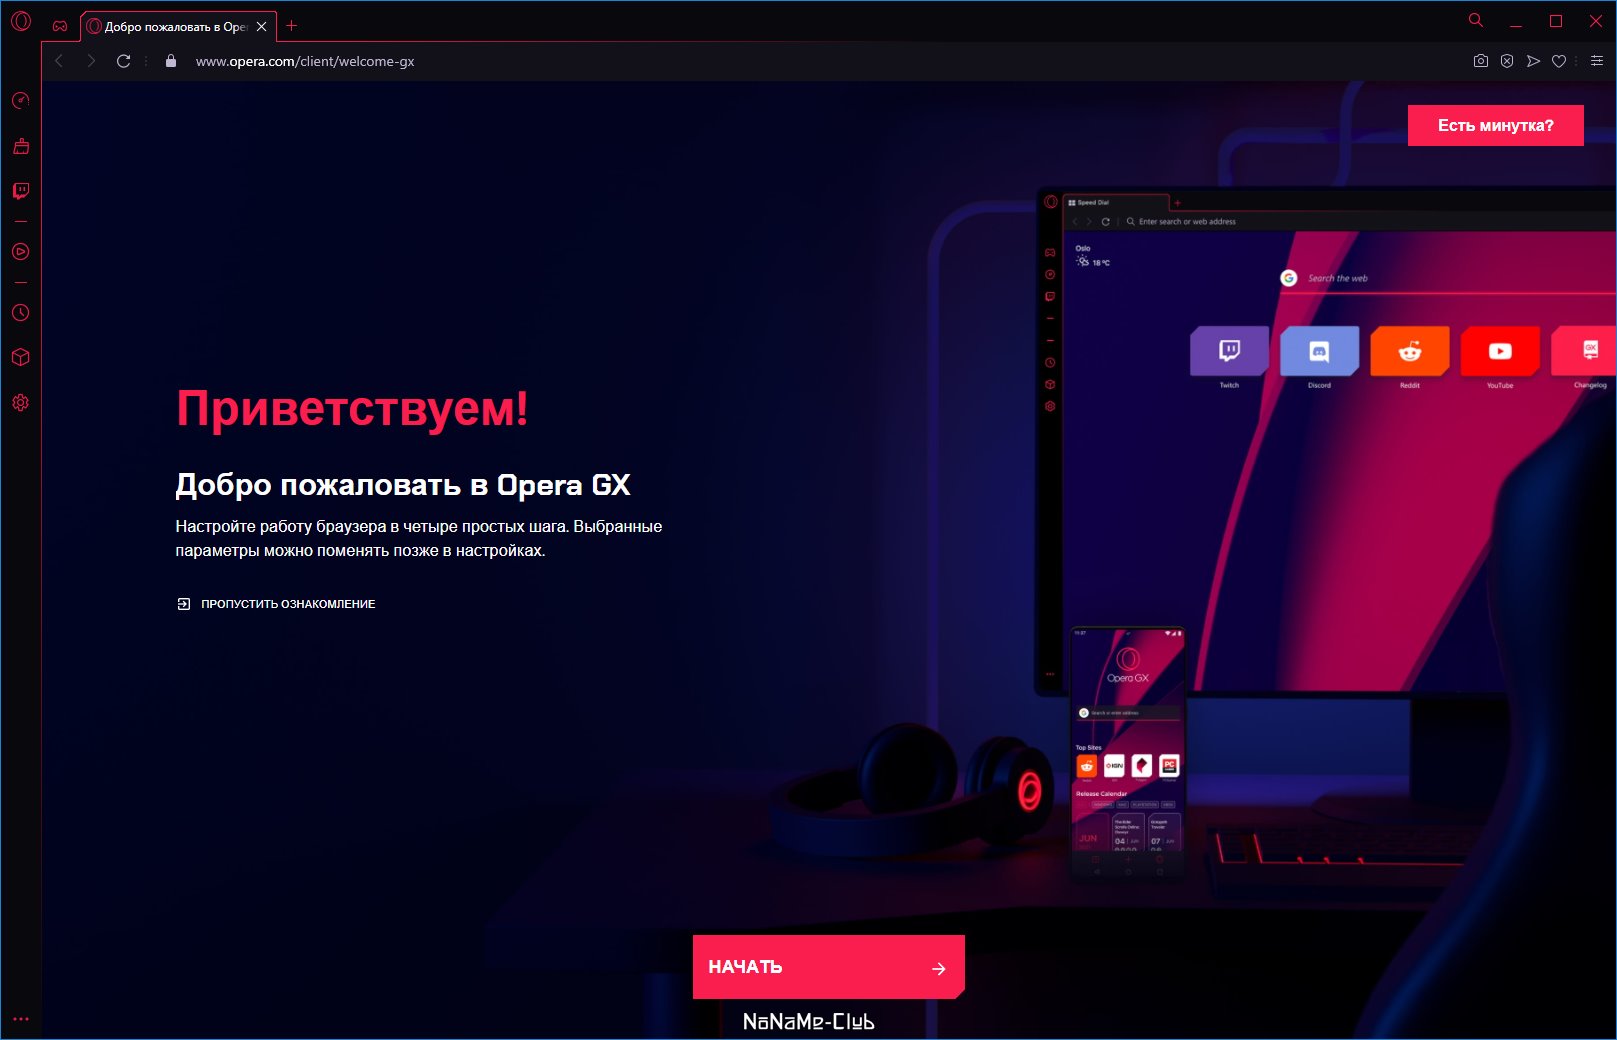 Opera GX 83.0.4254.66 + Portable [Multi/Ru]